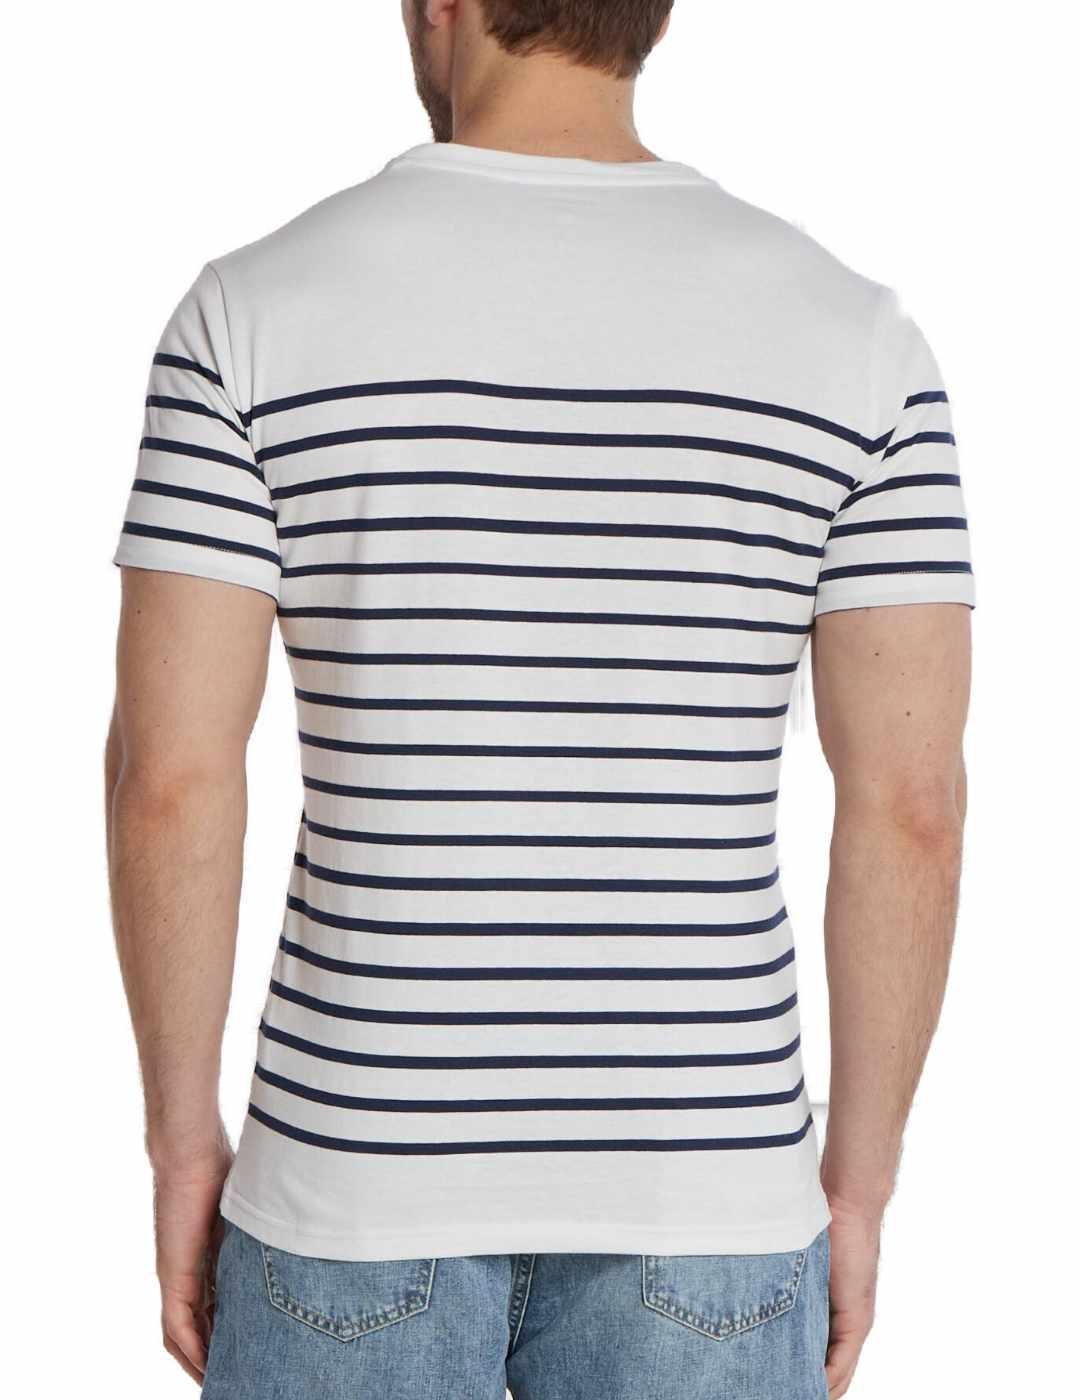 Camiseta Guess Striped raya azul manga corta para hombre